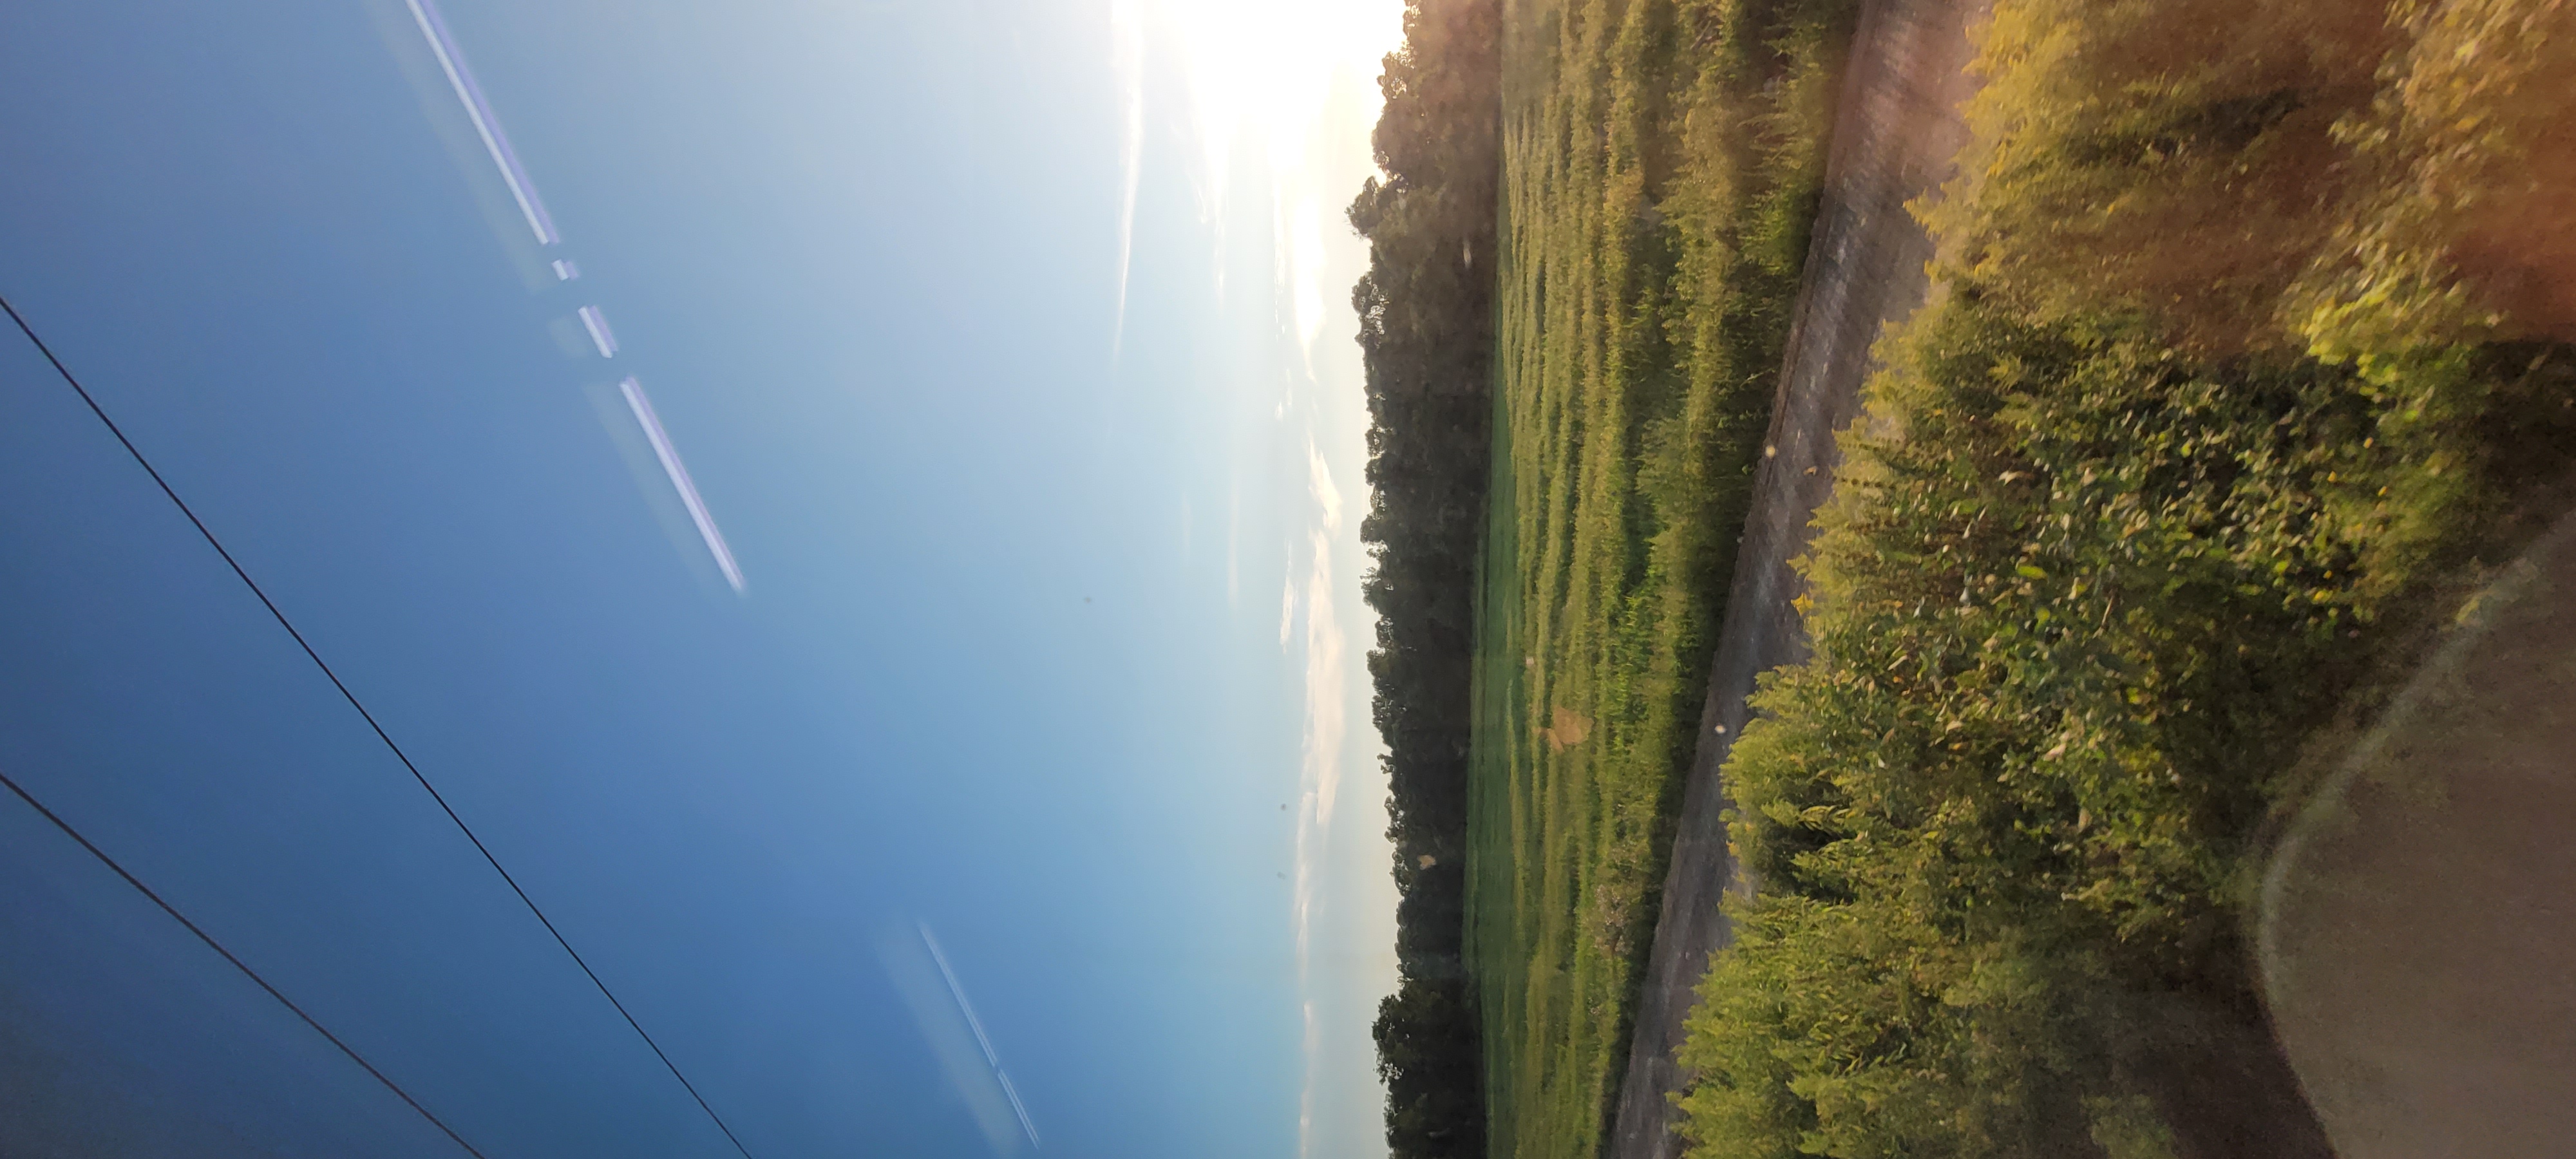 Scenes from train ride across Europe